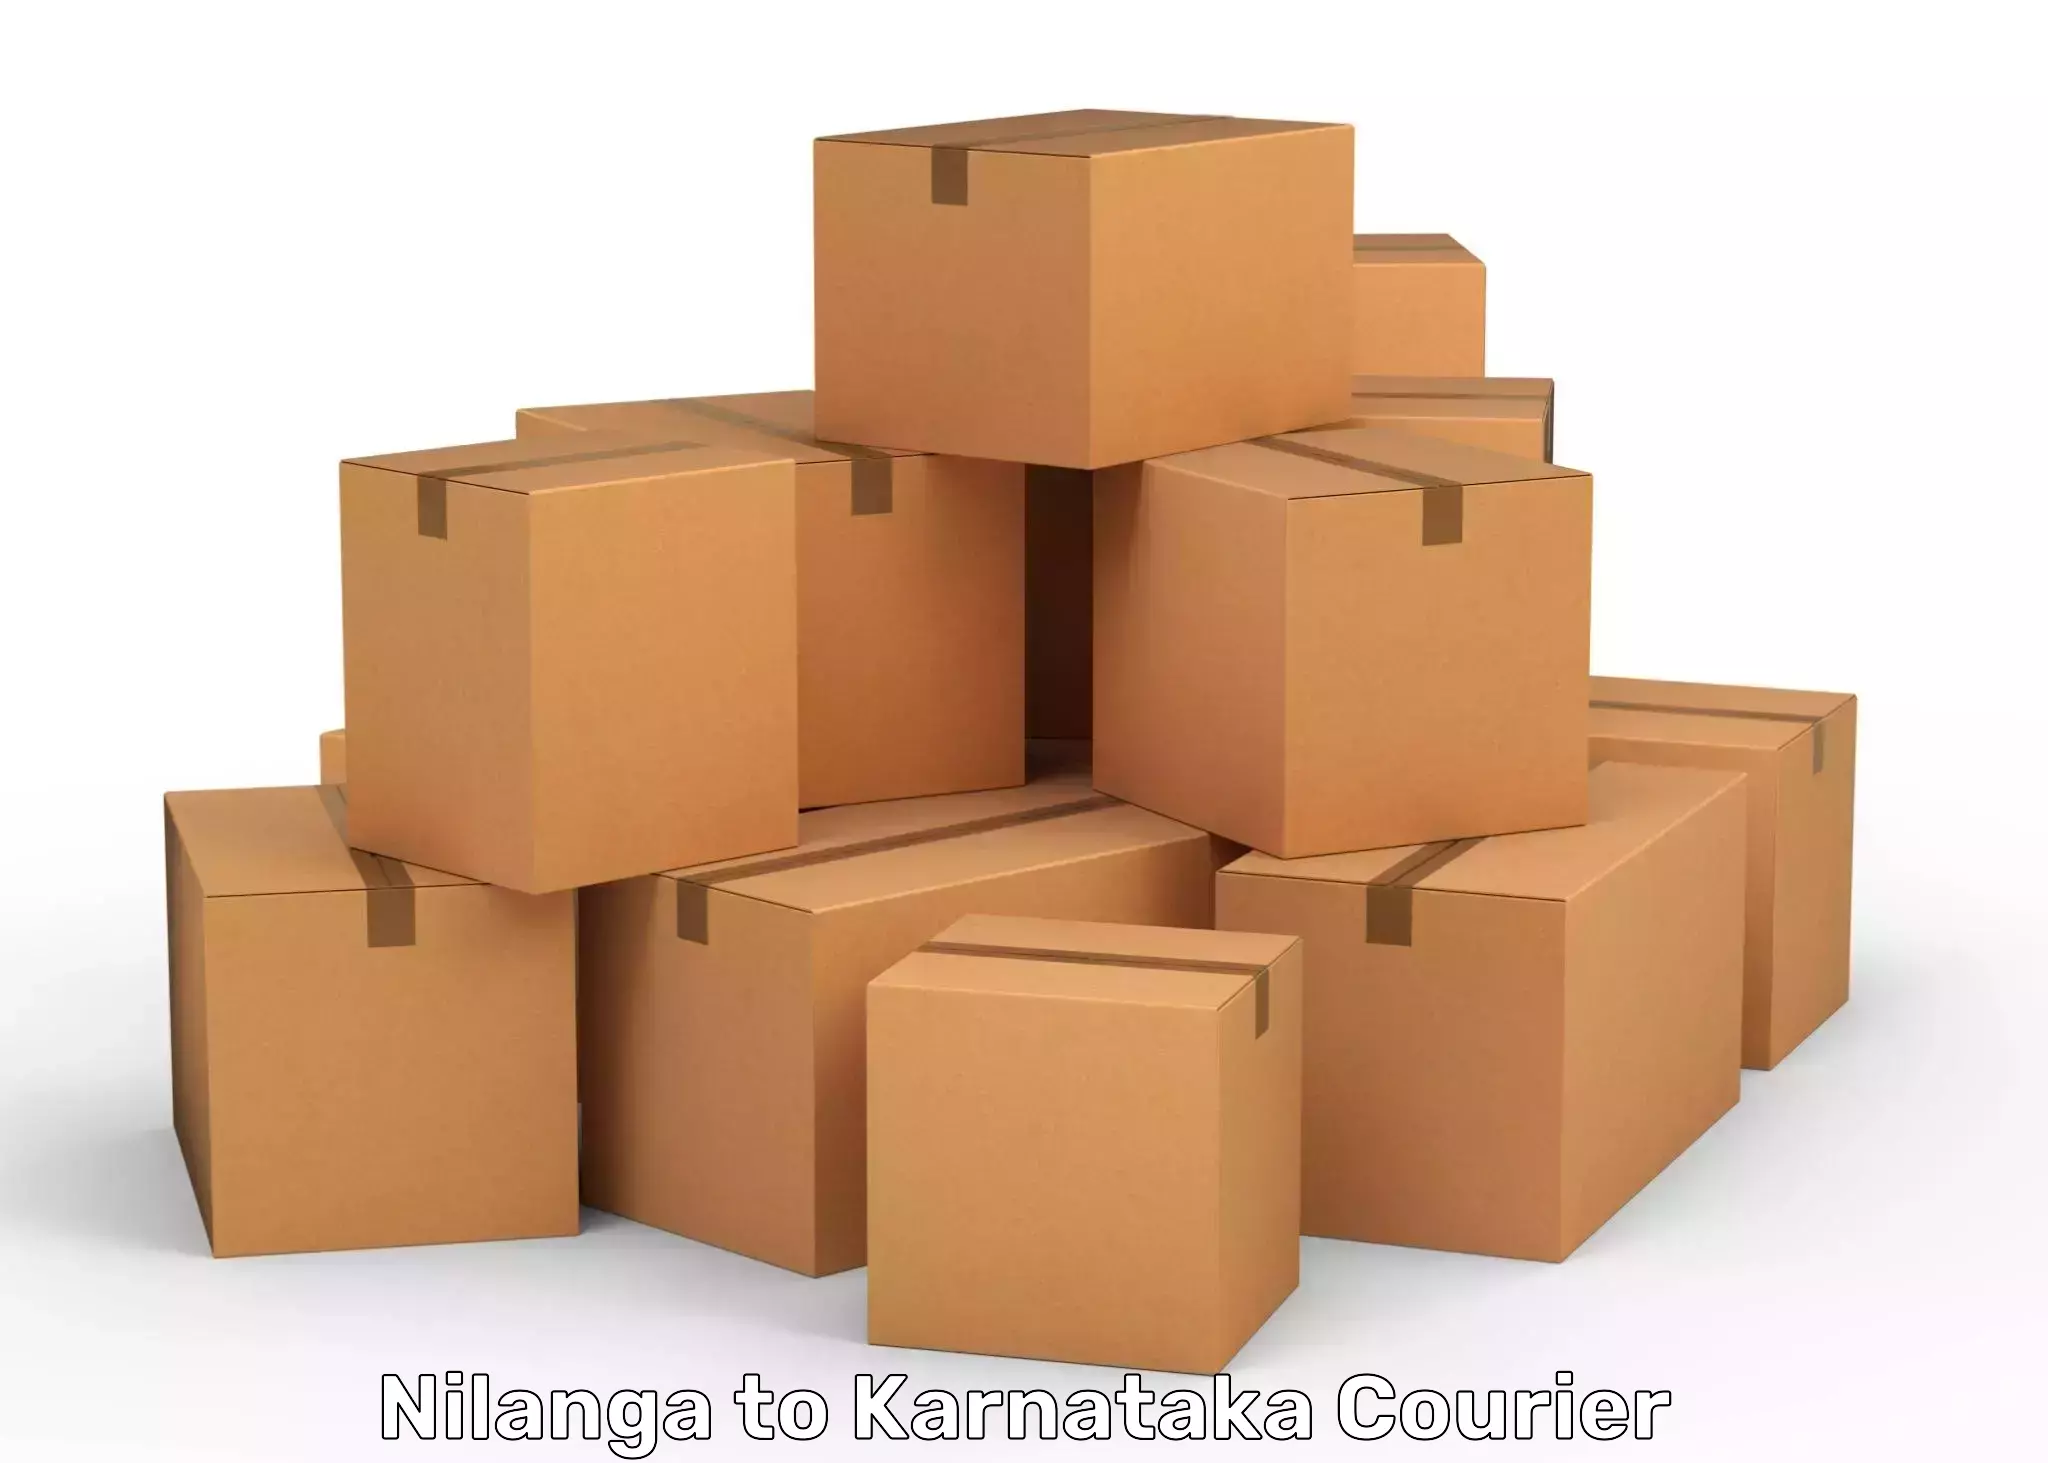 High-capacity parcel service Nilanga to Bengaluru